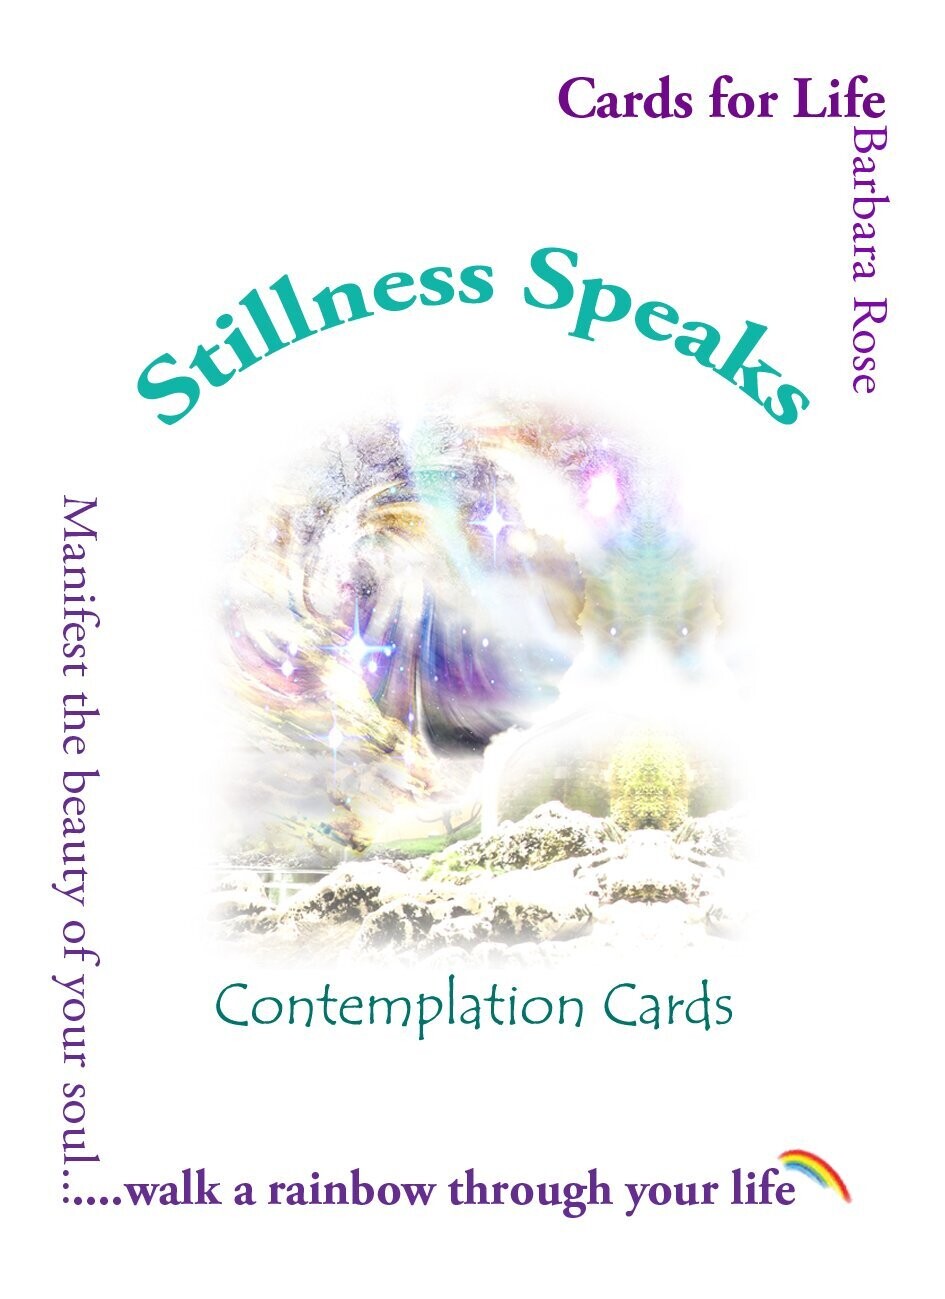 Stillness Speaks Cards